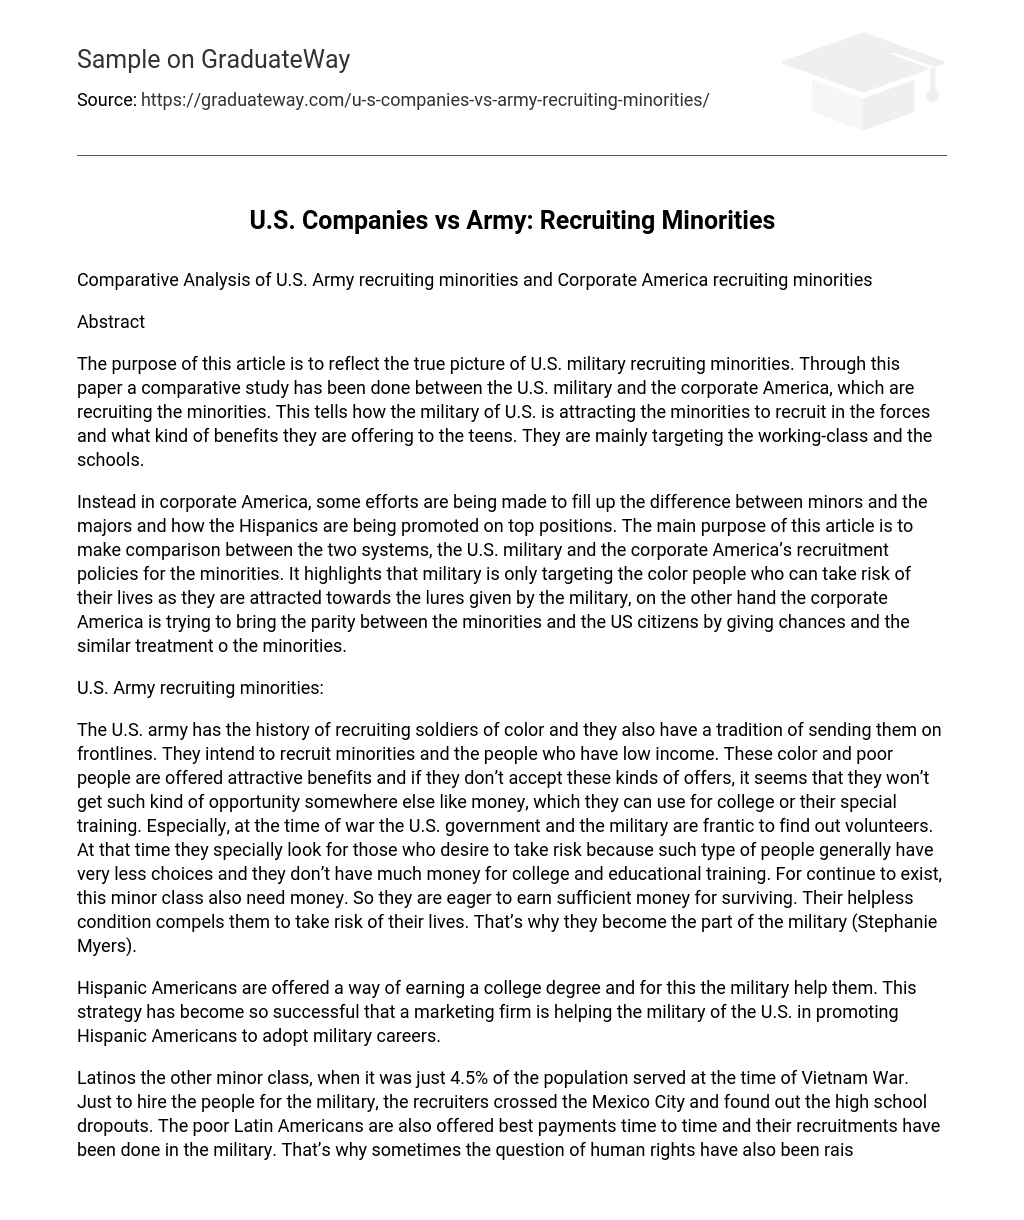 U.S. Companies vs Army: Recruiting Minorities